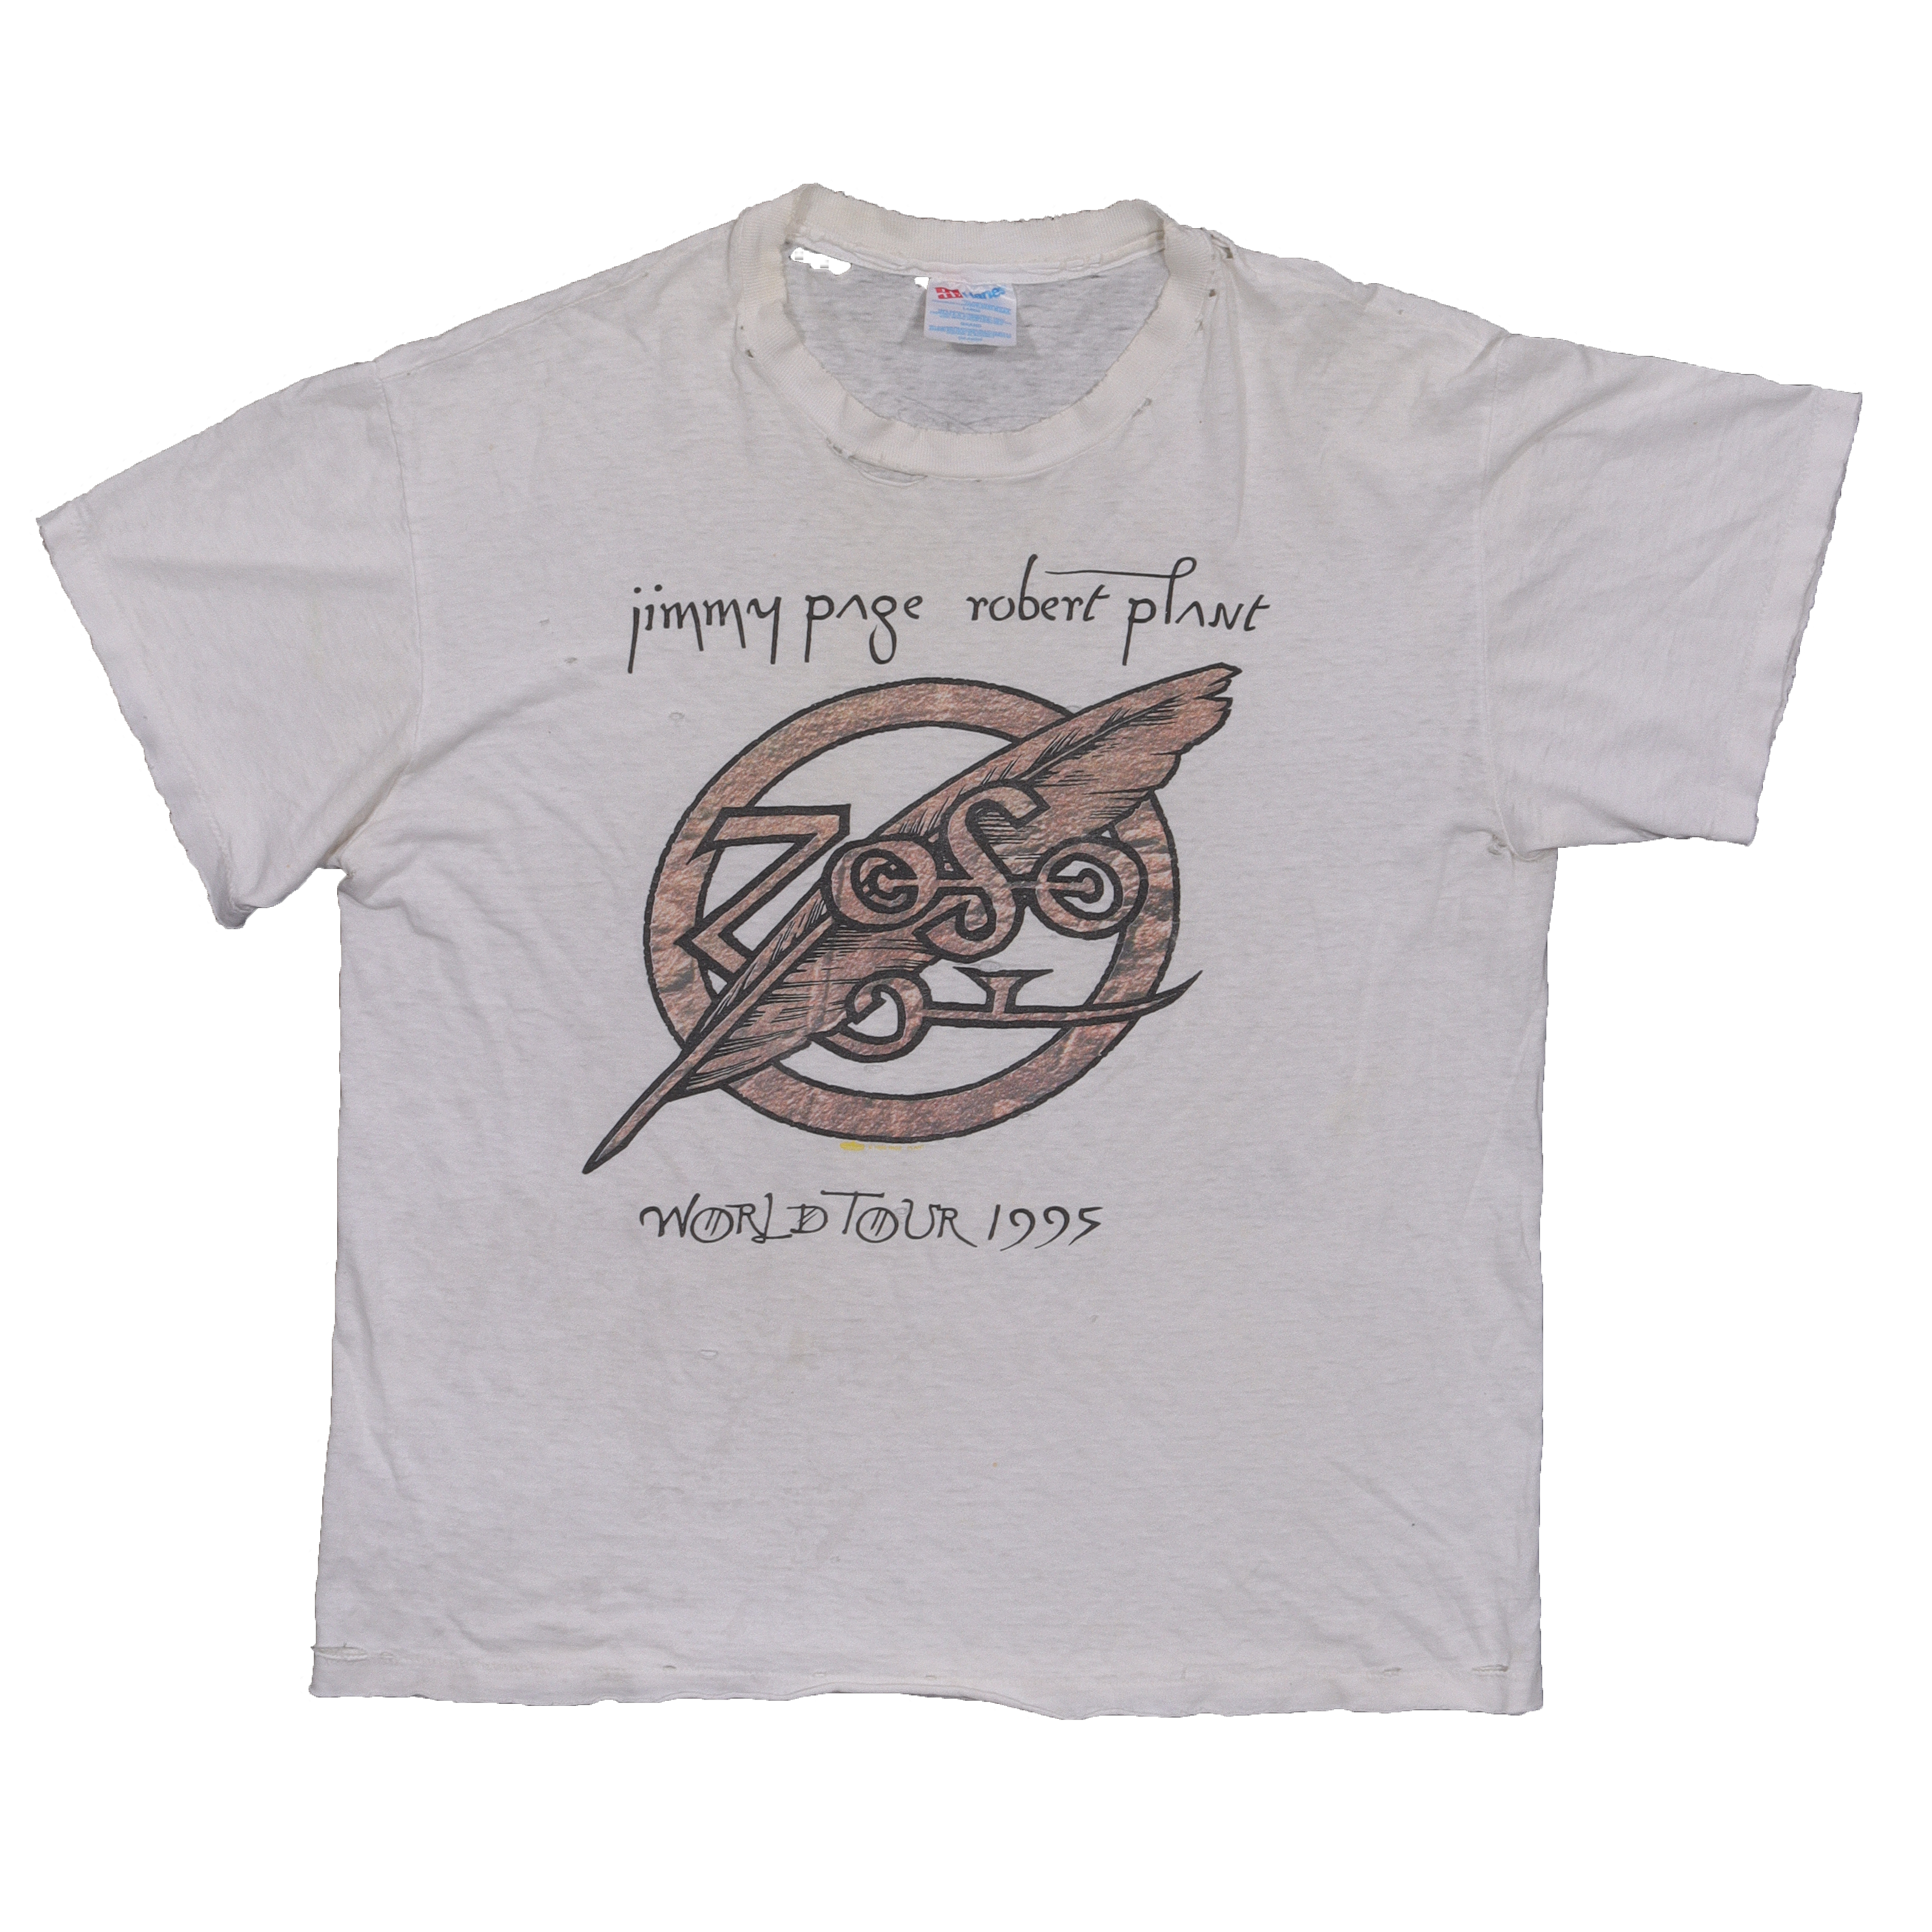 1995 Jimmy Page Tour T-Shirt